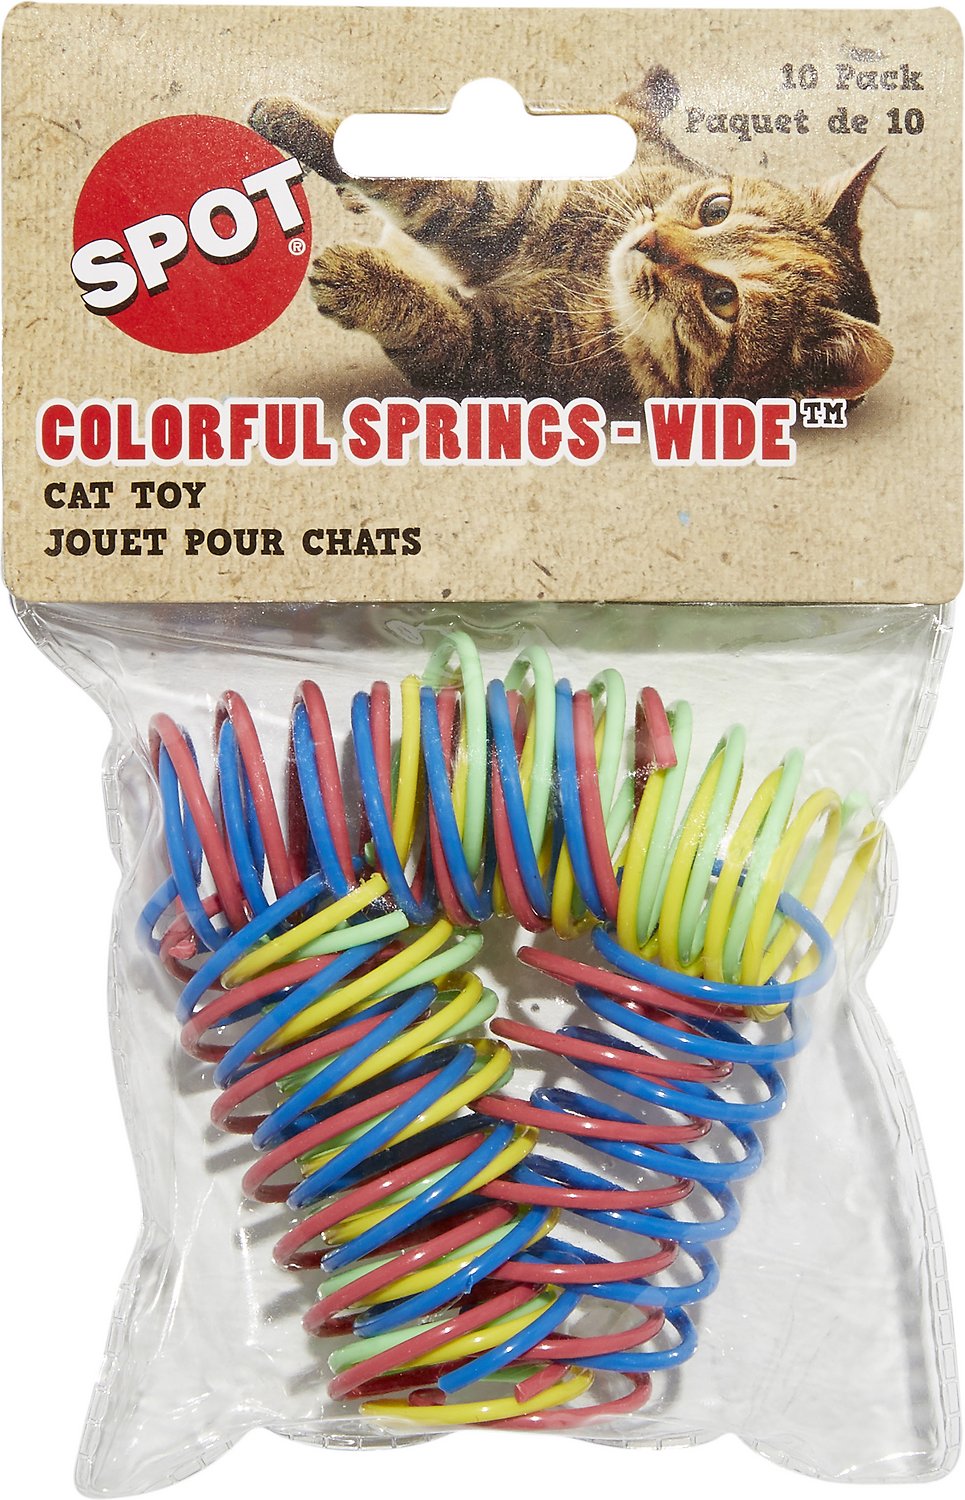 Bag of colorful plastic springs